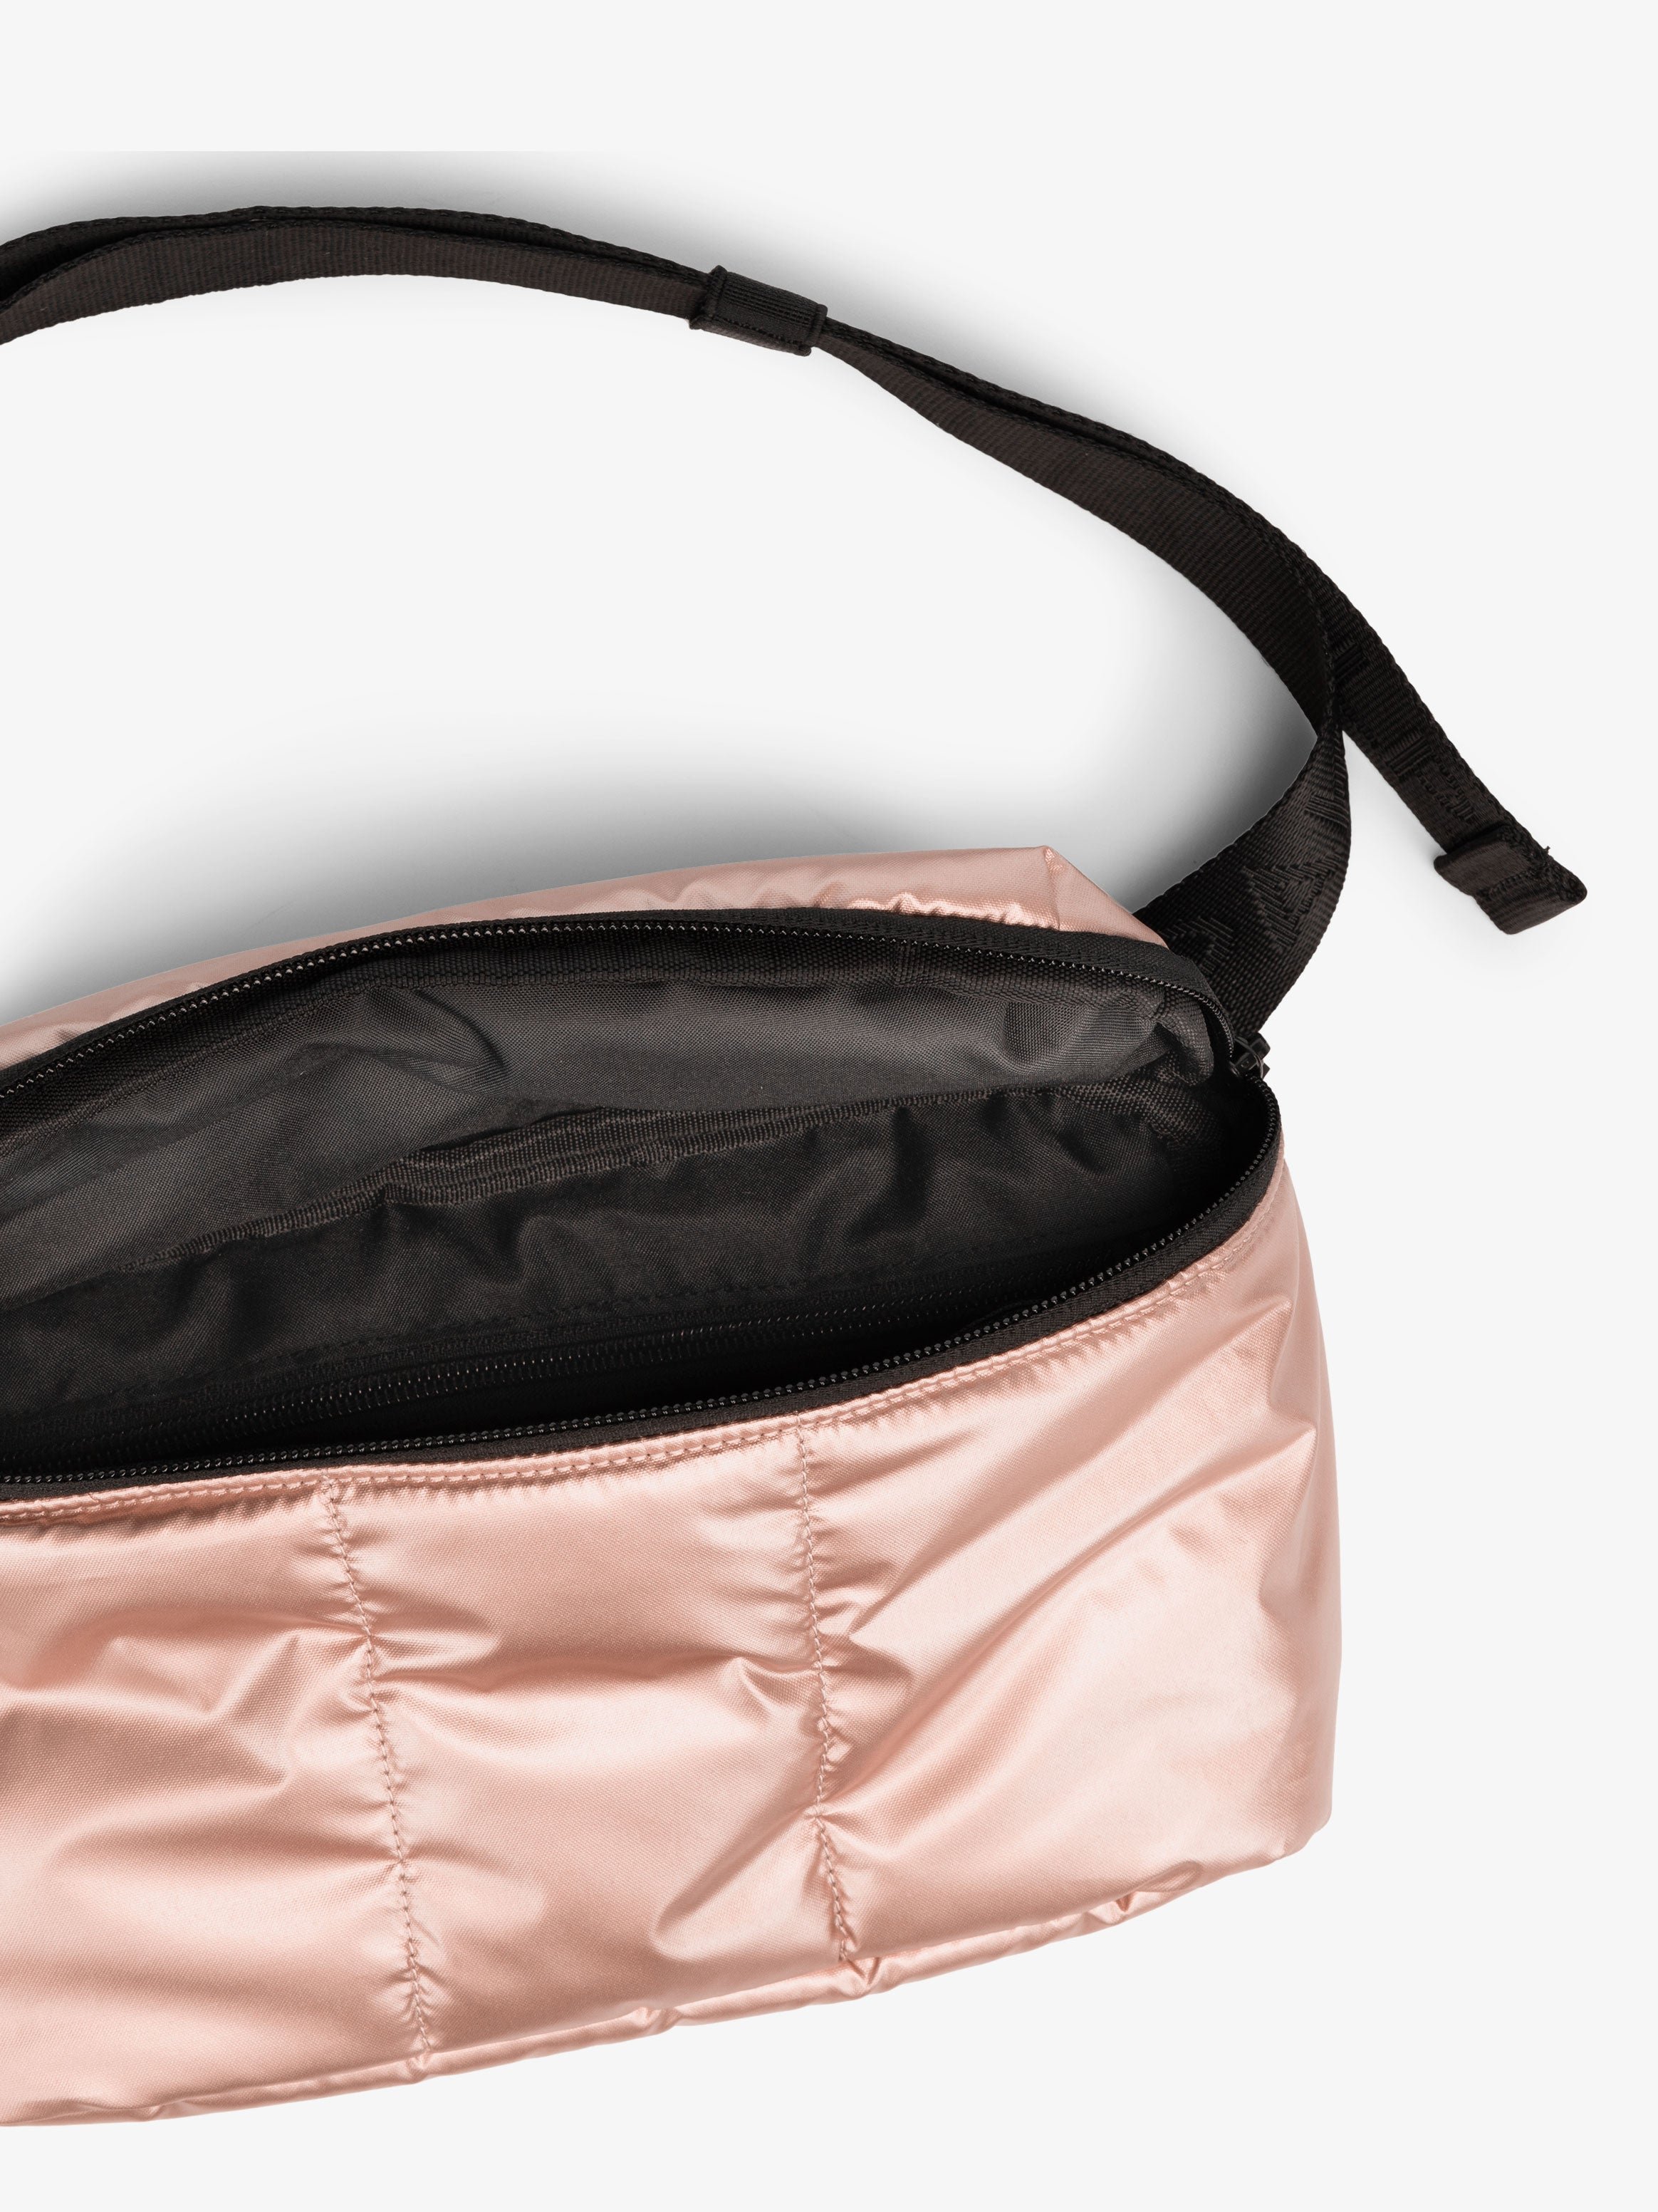 CALPAK Luka Belt Bag close up interior and strap in metallic pink